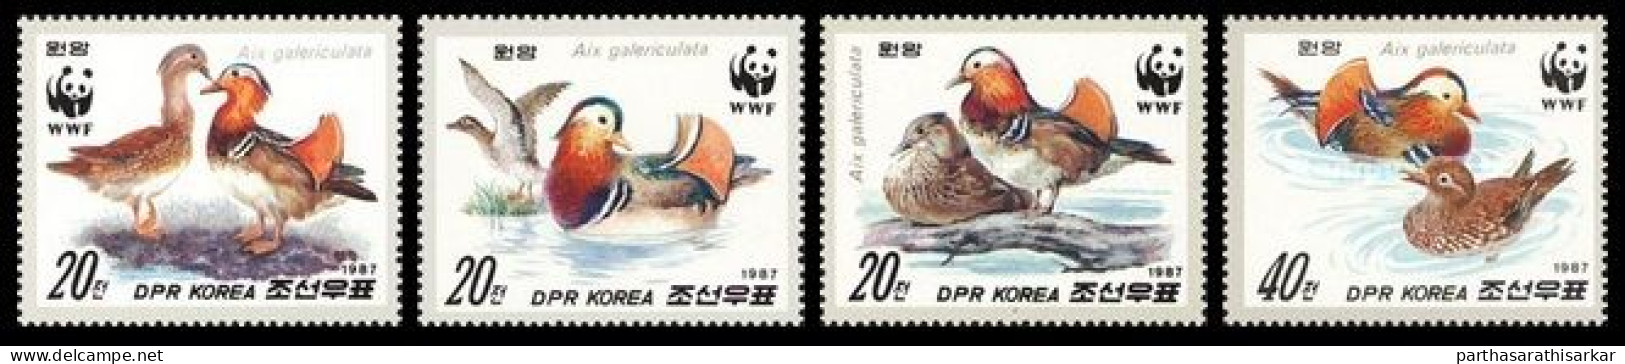 NORTH KOREA 1987 WWF WORLD NATURE CONSERVATION MANDARIN DUCKS COMPLETE SET MNH - Ongebruikt